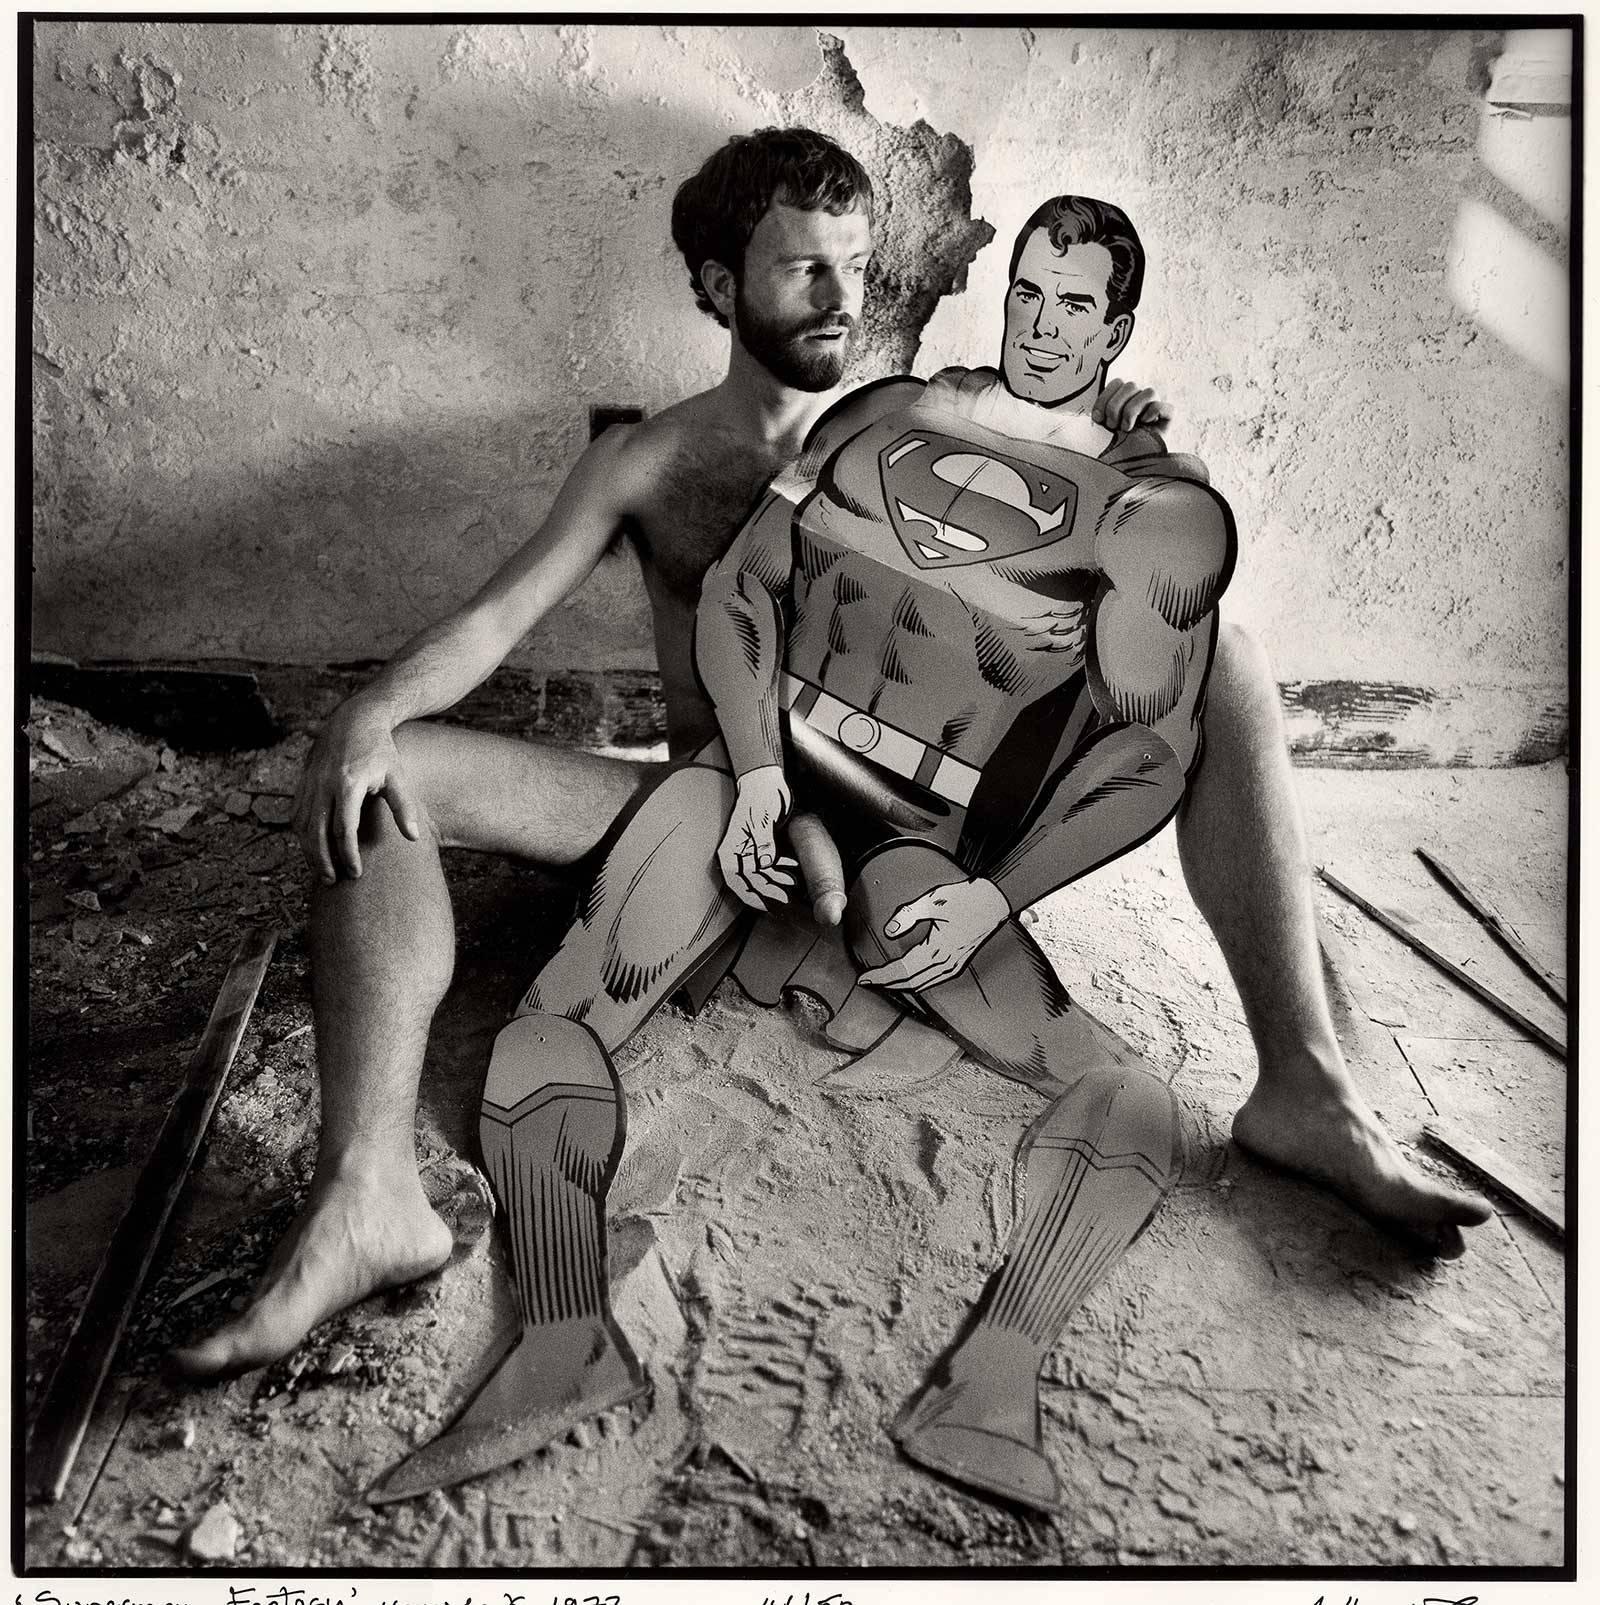 Arthur Tress Figurative Photograph - Superman Fantasy, New York (Male Nude fills the gap in super hero cutout figure)